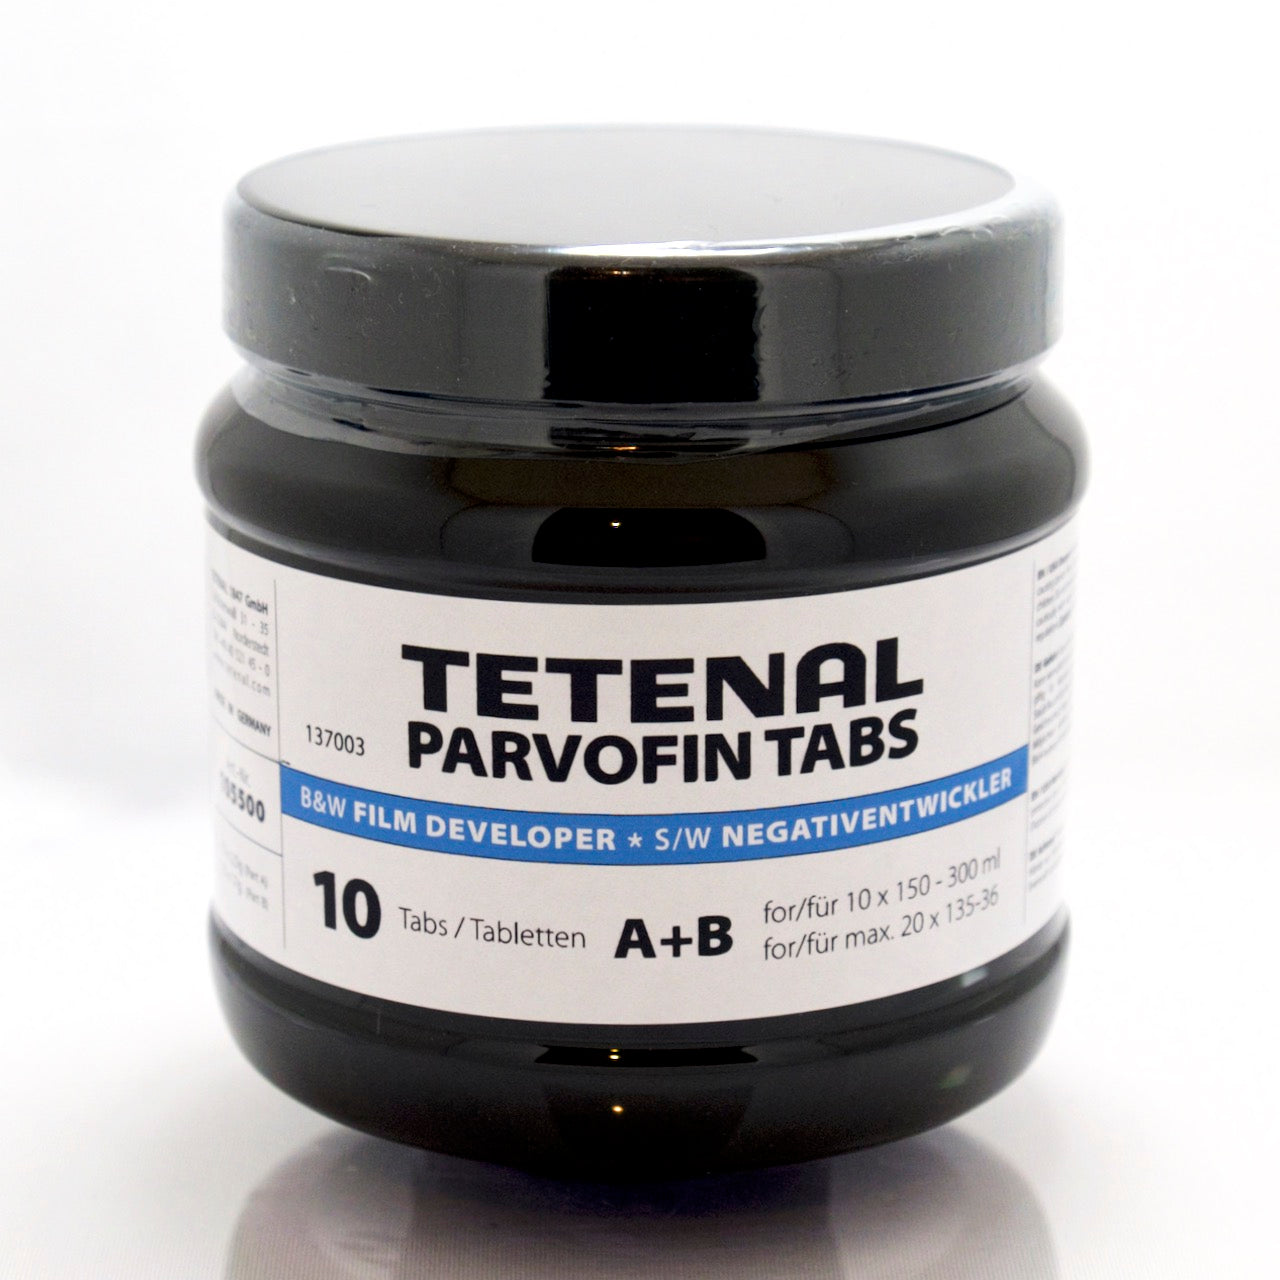 Tetenal Parvofin tablets (10 tabs)